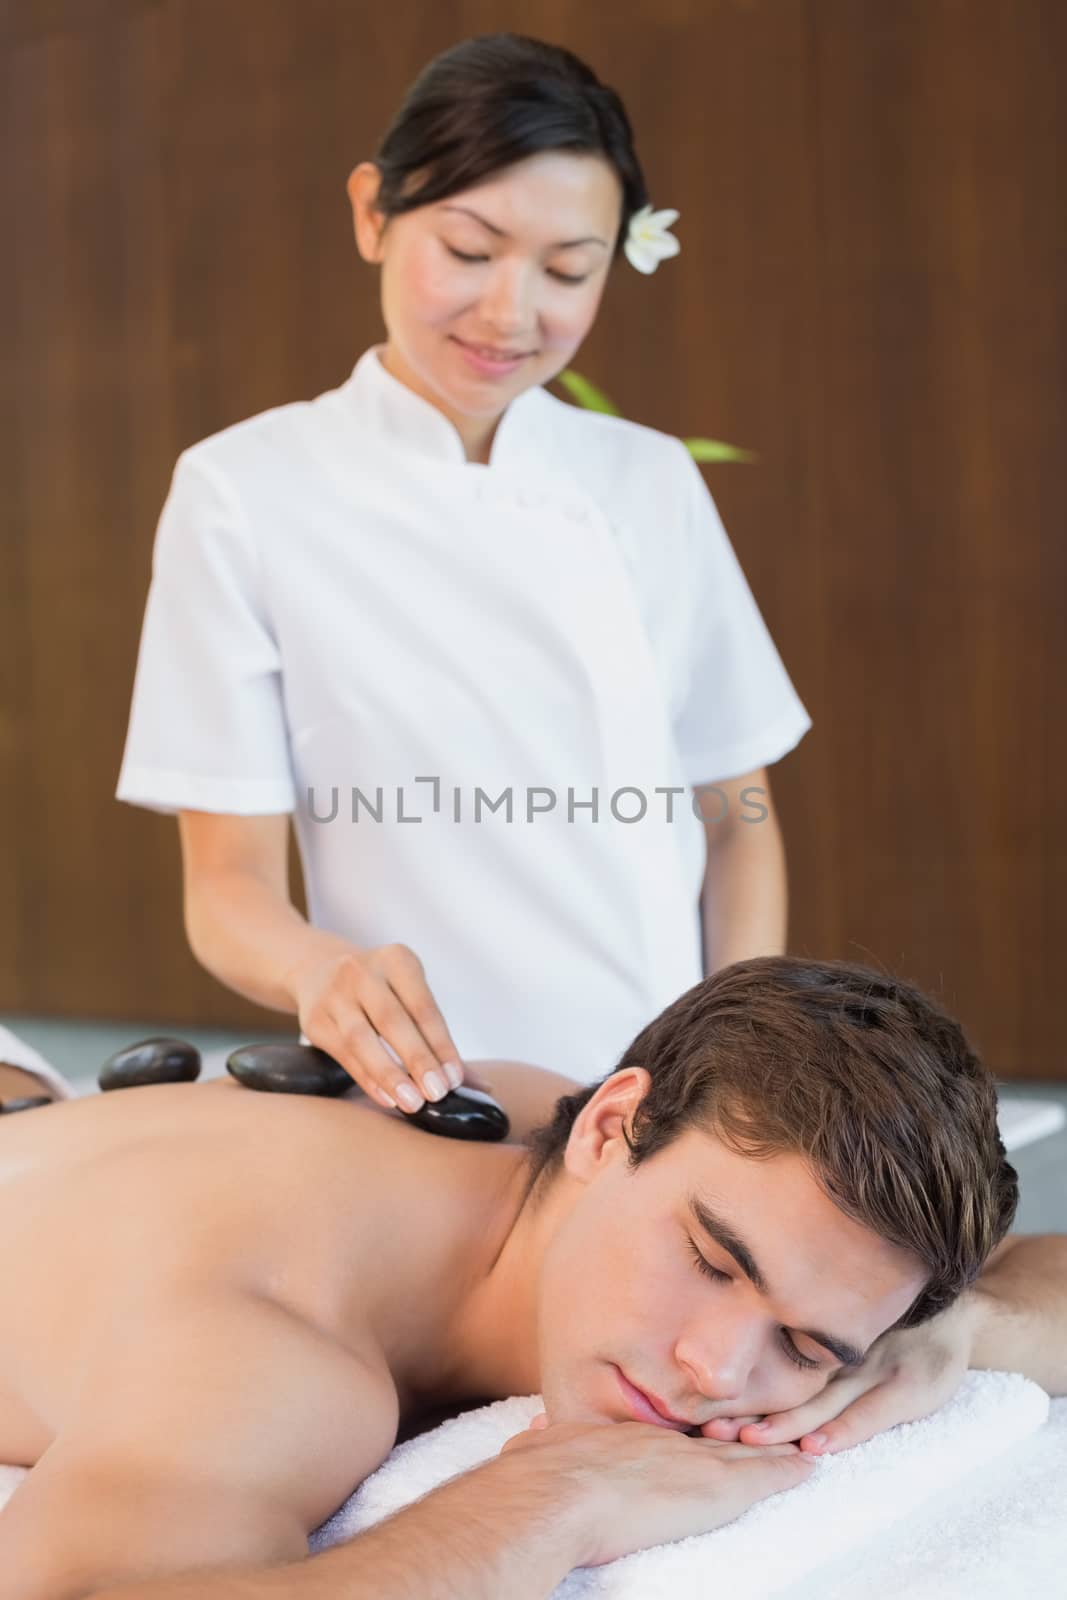 Man receiving stone massage at spa center by Wavebreakmedia